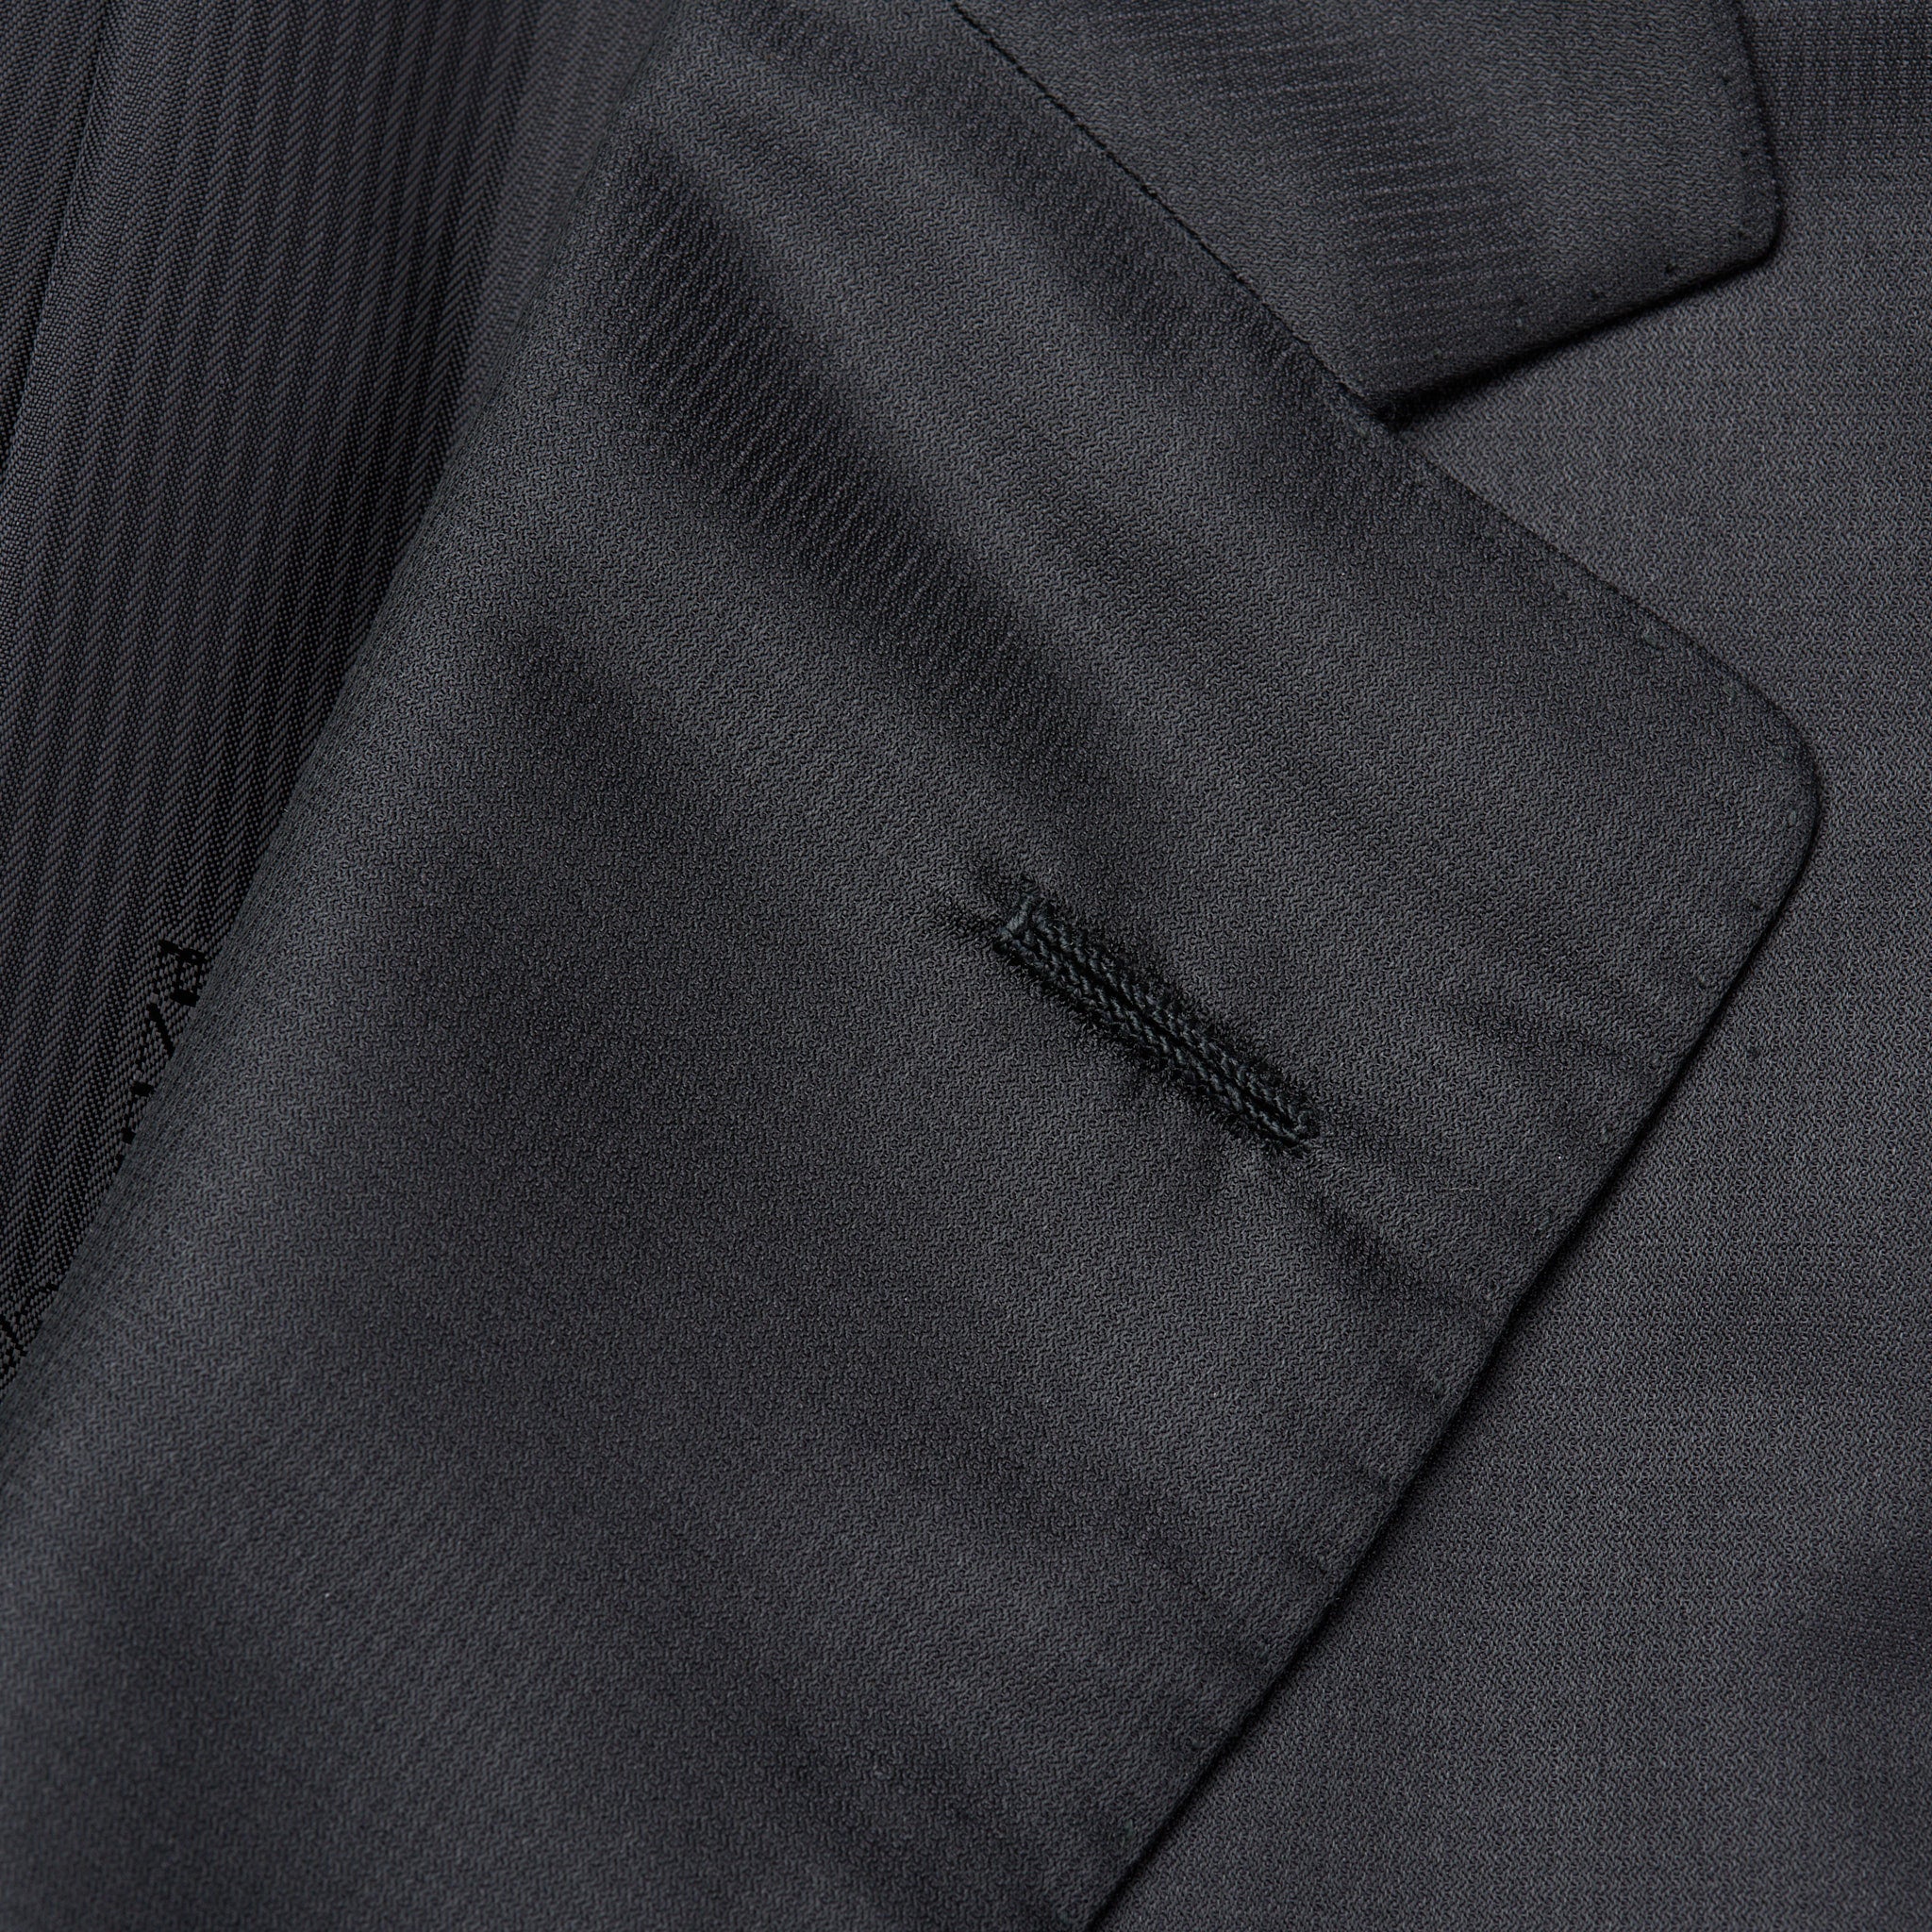 D'AVENZA "KENT" Handmade Black Striped 1 Button Wool Silk Suit 50 NEW US 40 Long D'AVENZA